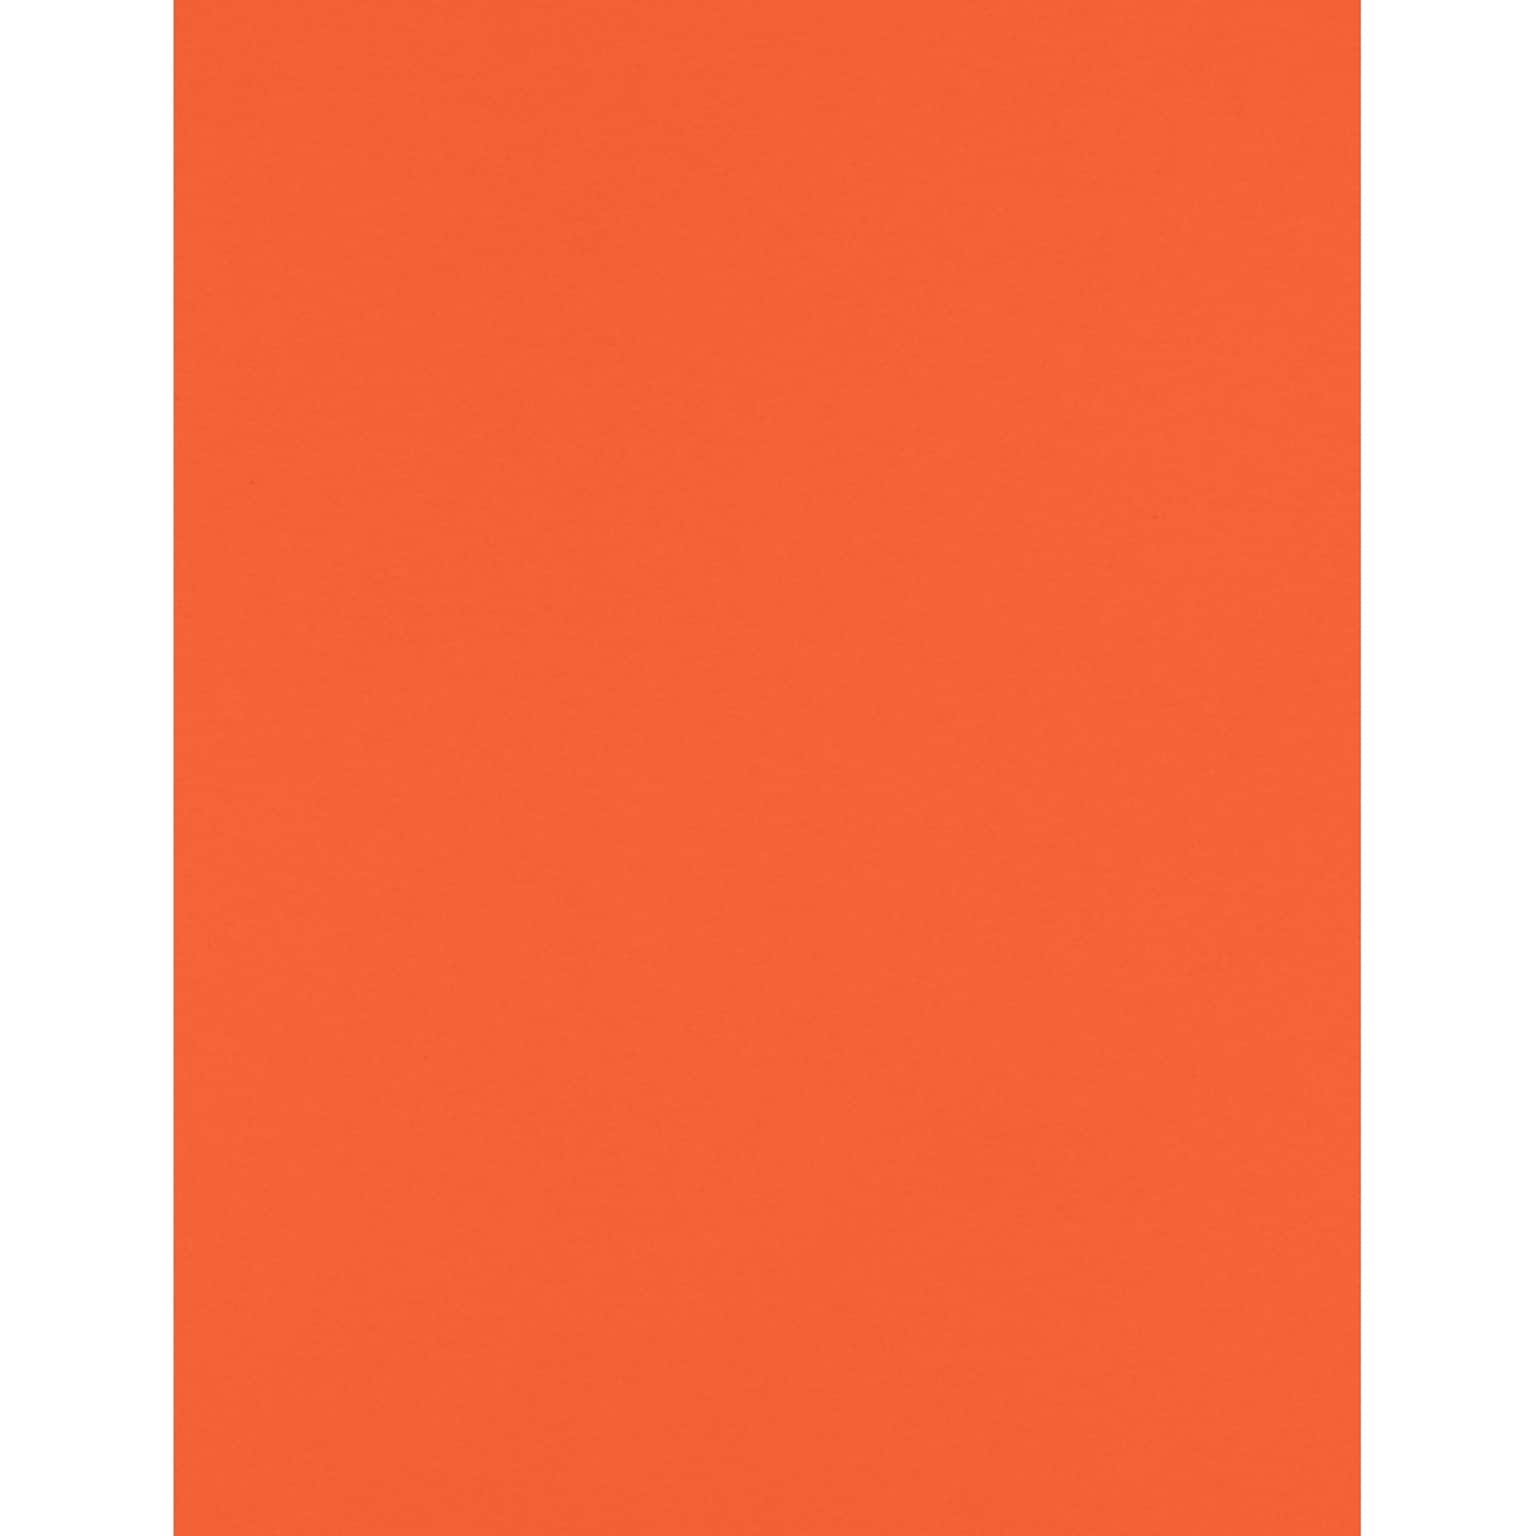 JAM PAPER 8.5” x 11” Cardstock, 100lb, Tangerine, 50/pack  (81211-C-112-50)